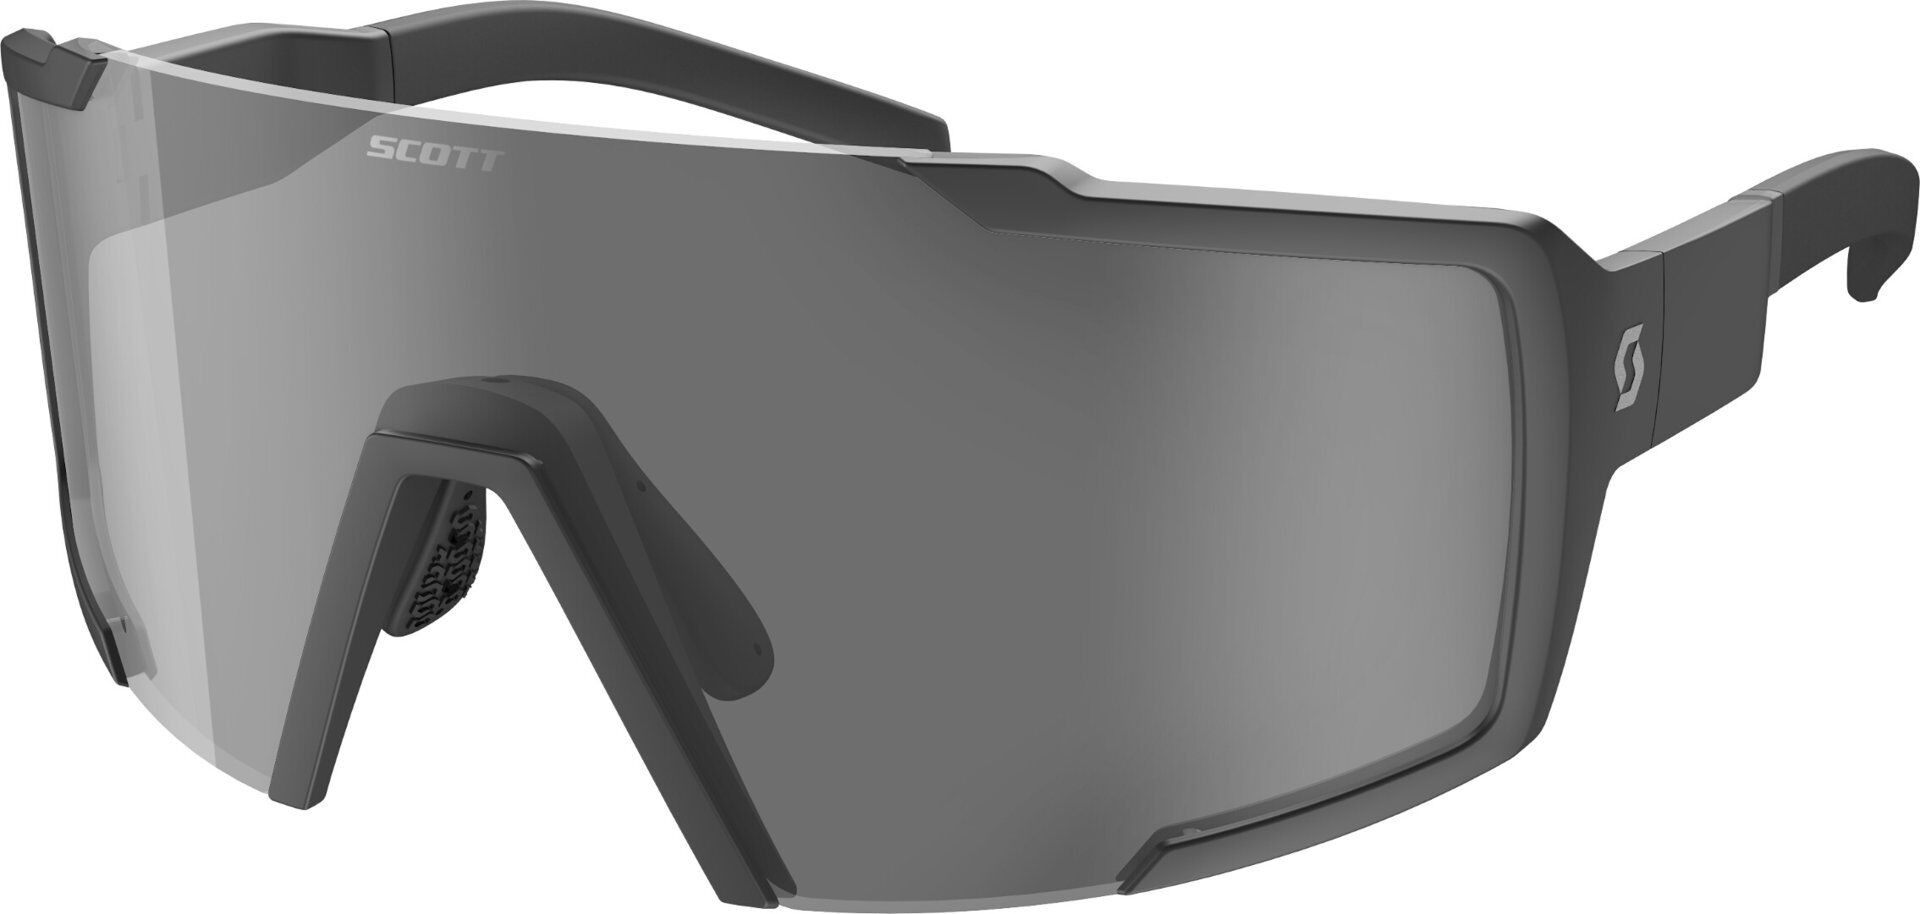 Scott Shield Gafas de sol - Negro (un tamaño)